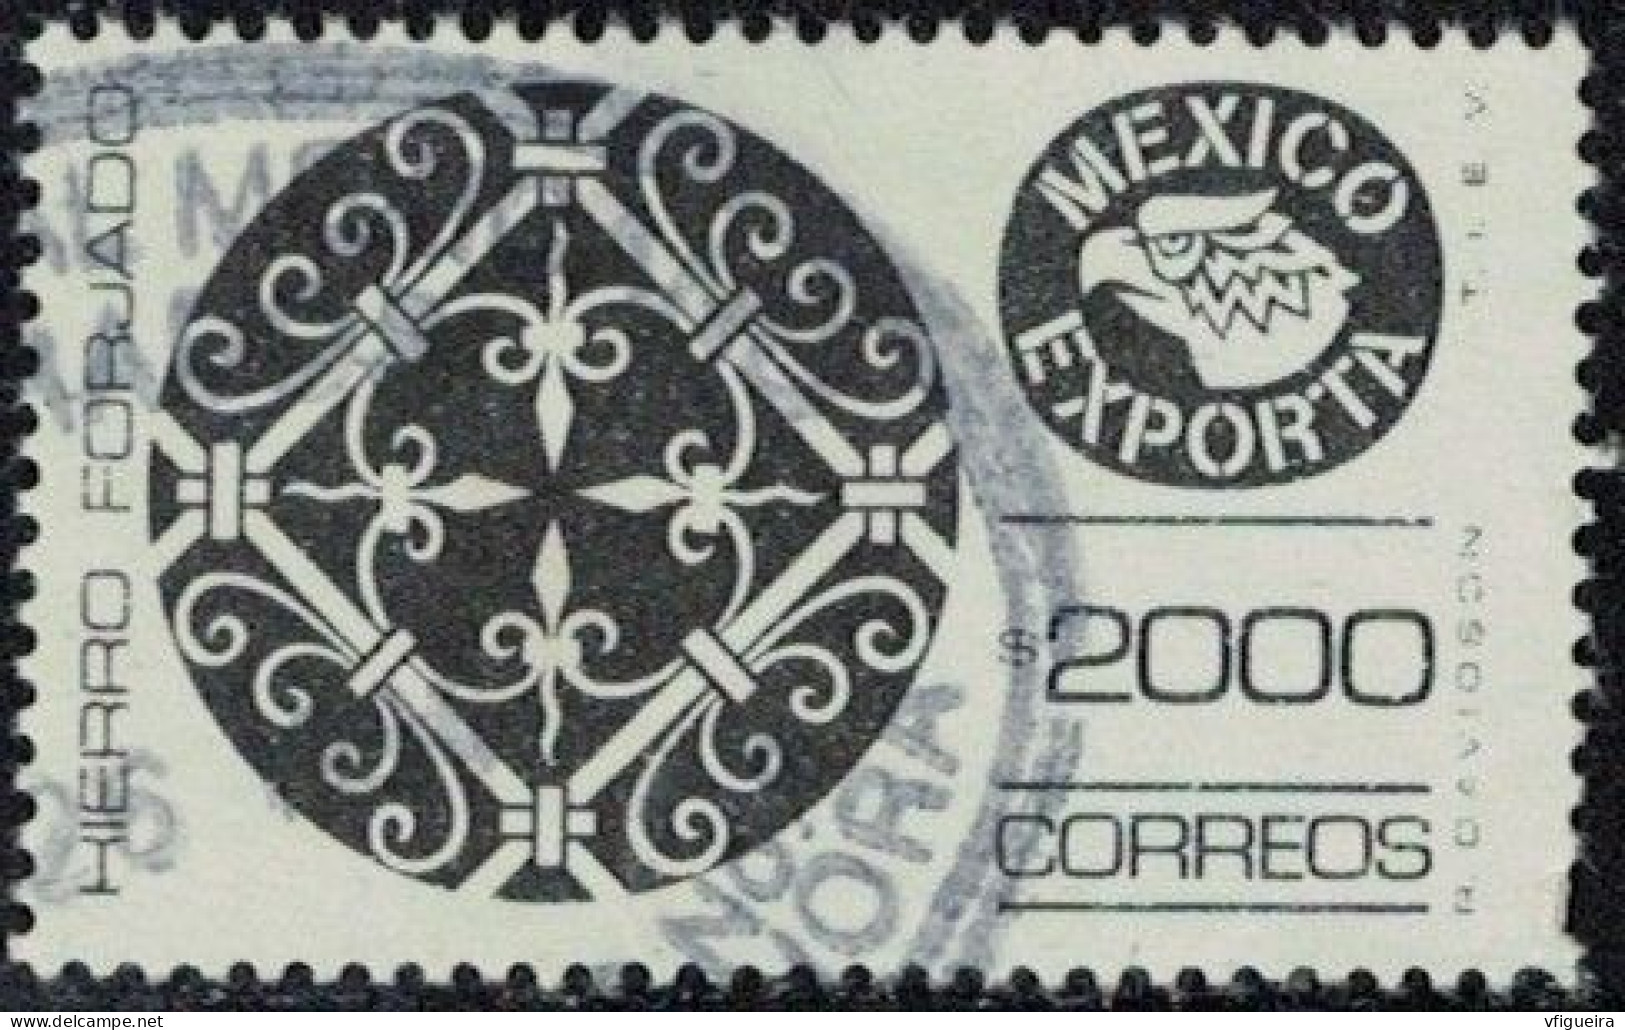 Mexique 1989 Oblitéré Used Exportation Hierro Forjado Fer Forgé SU - Messico